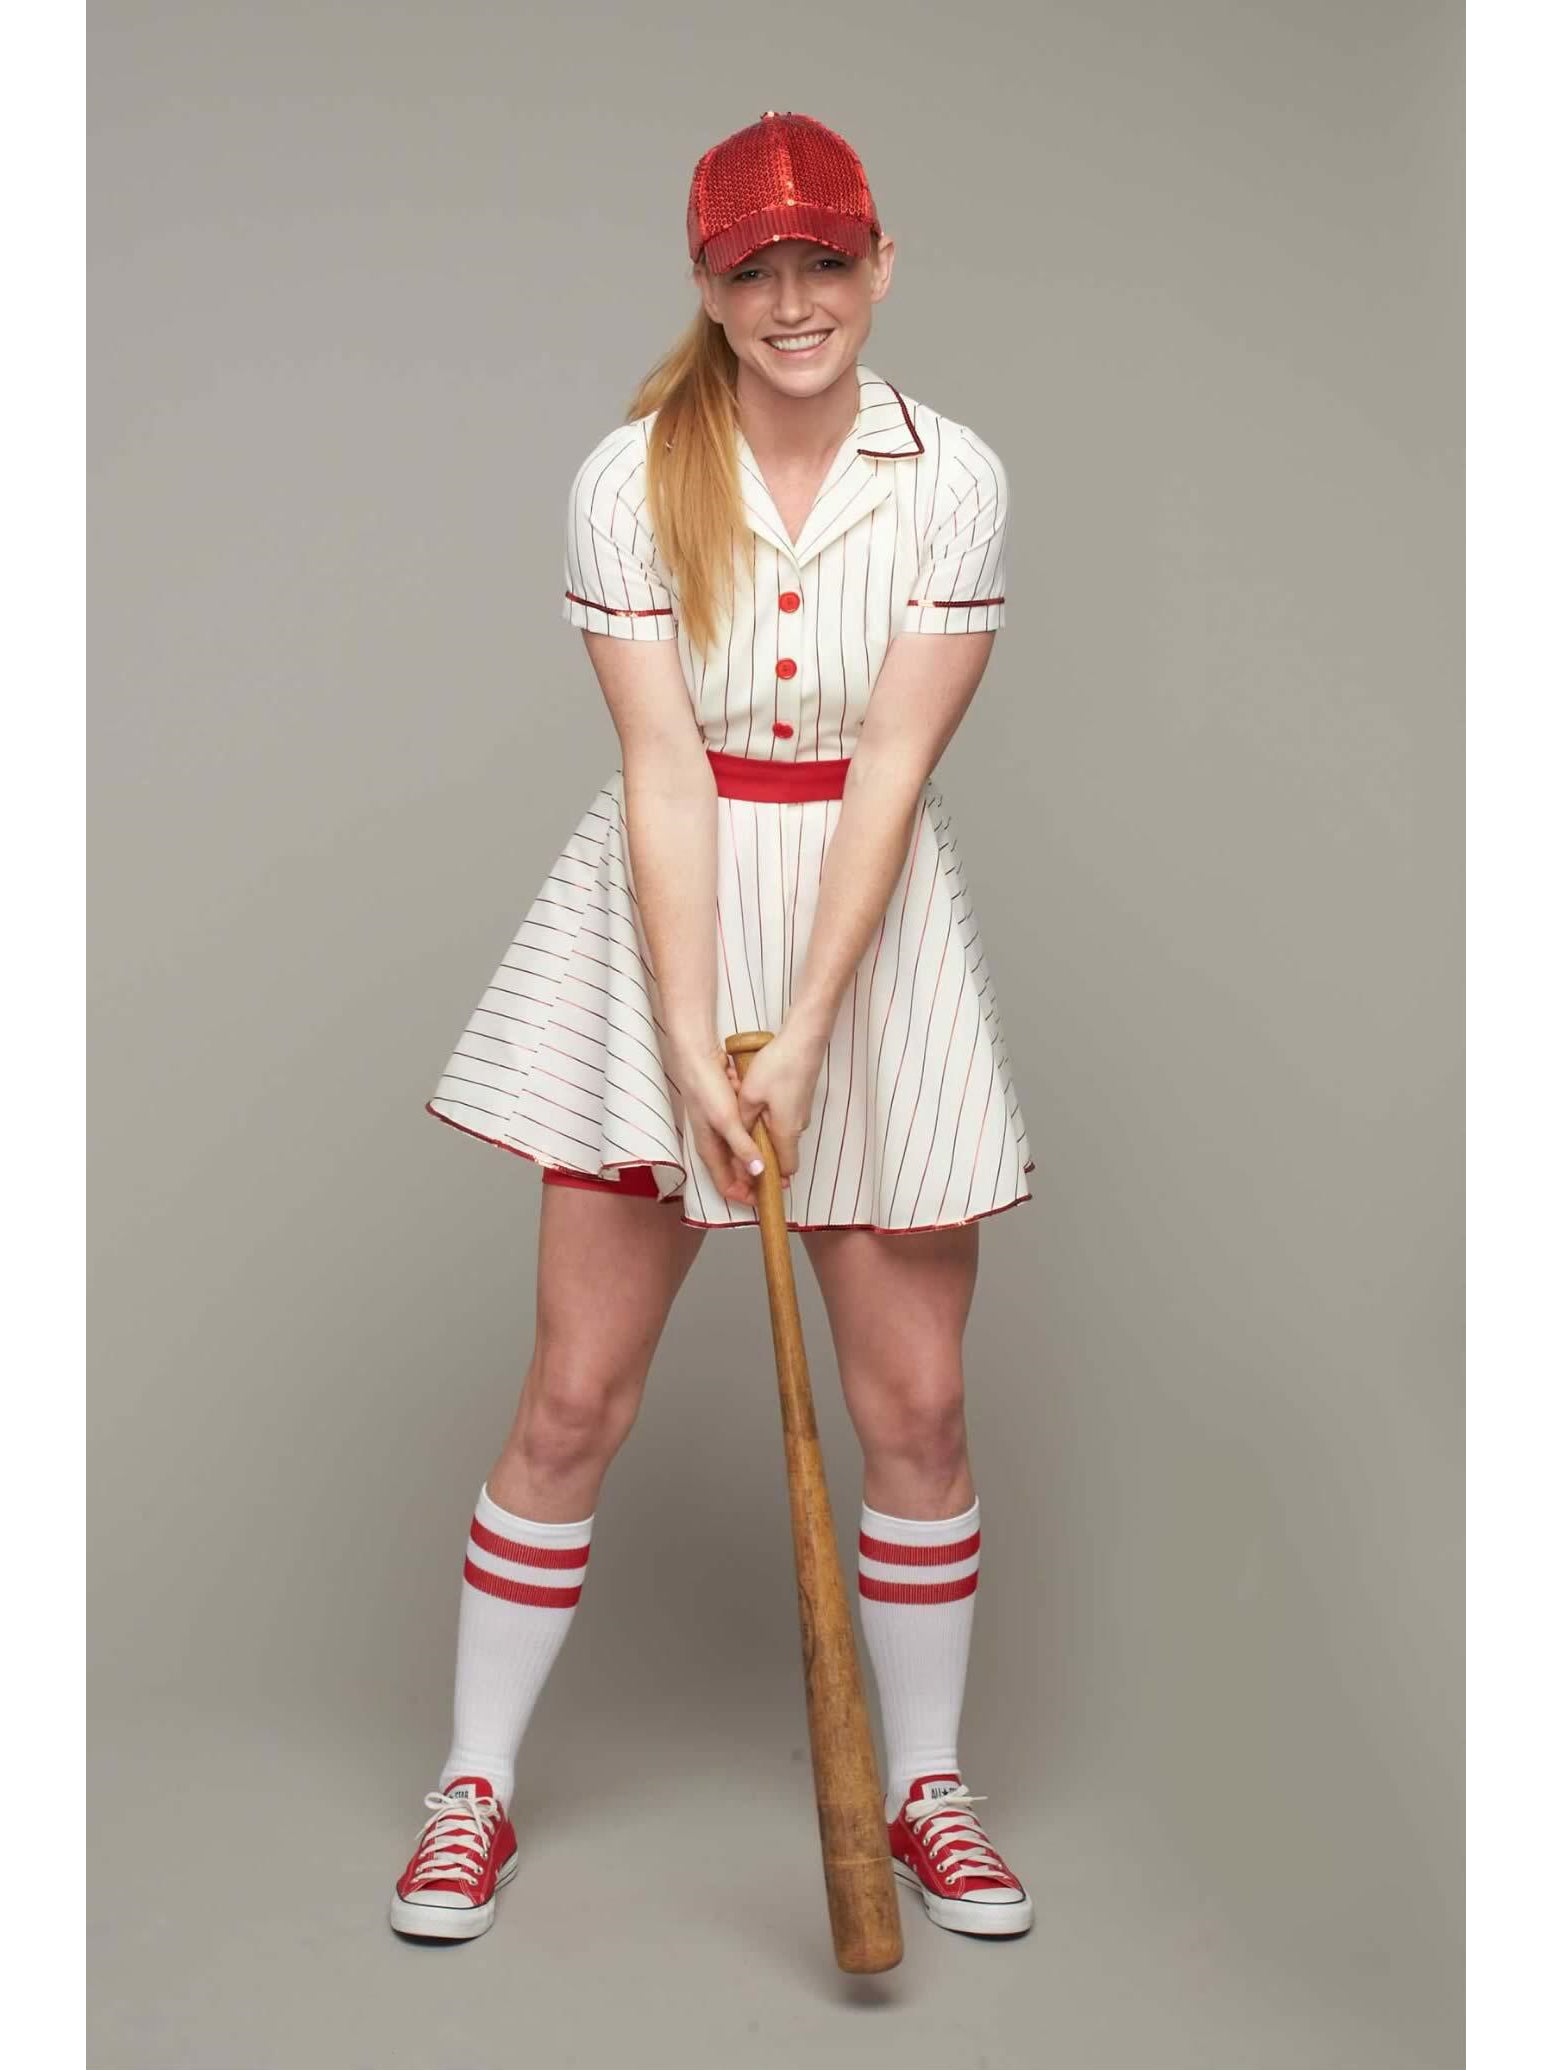 Retro Baseball Player Costume for Women, Size 4/6